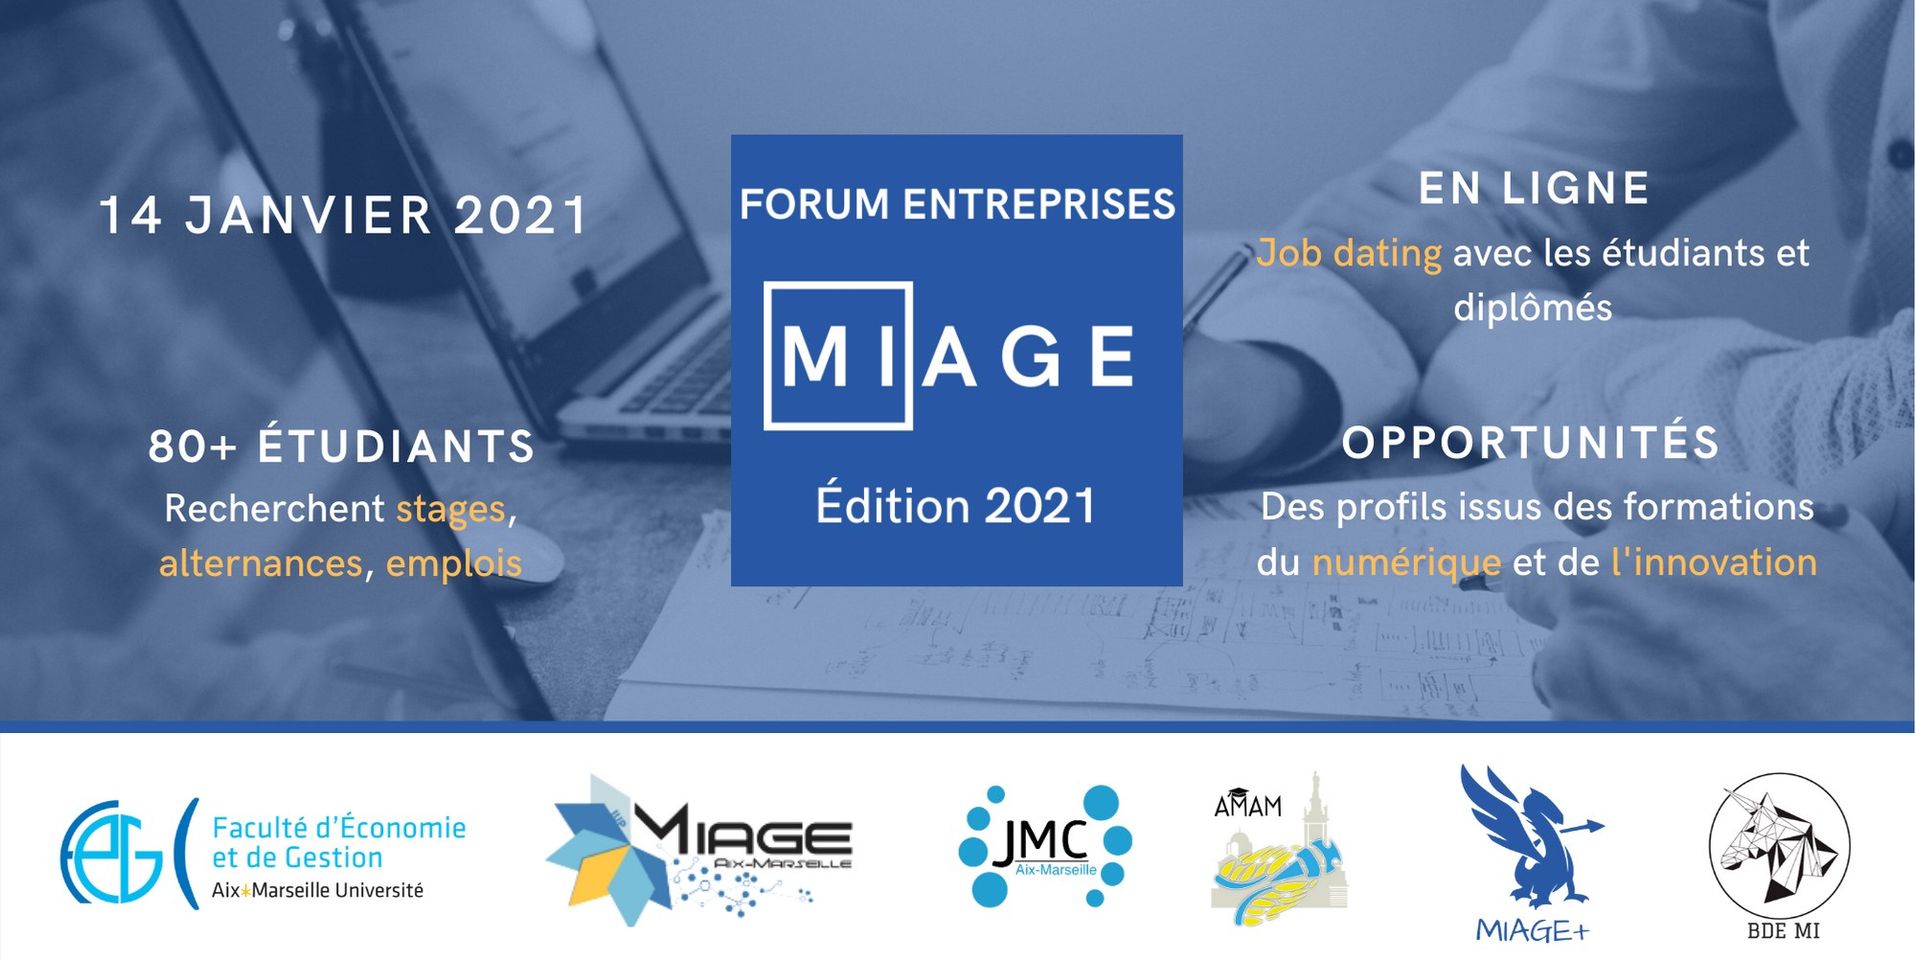 Forum Entreprises MIAGE